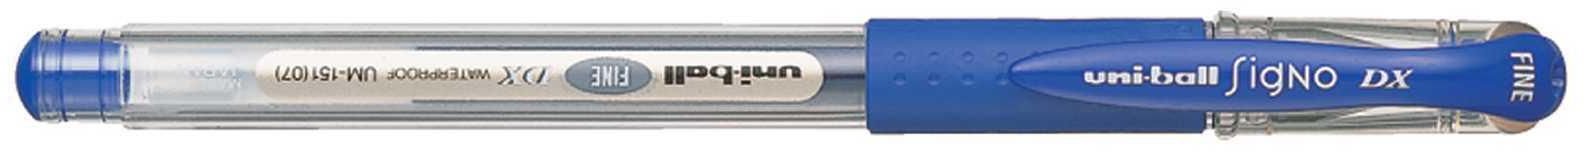 Uni-ball Signo DX Gel Pen Blue 0.7mm